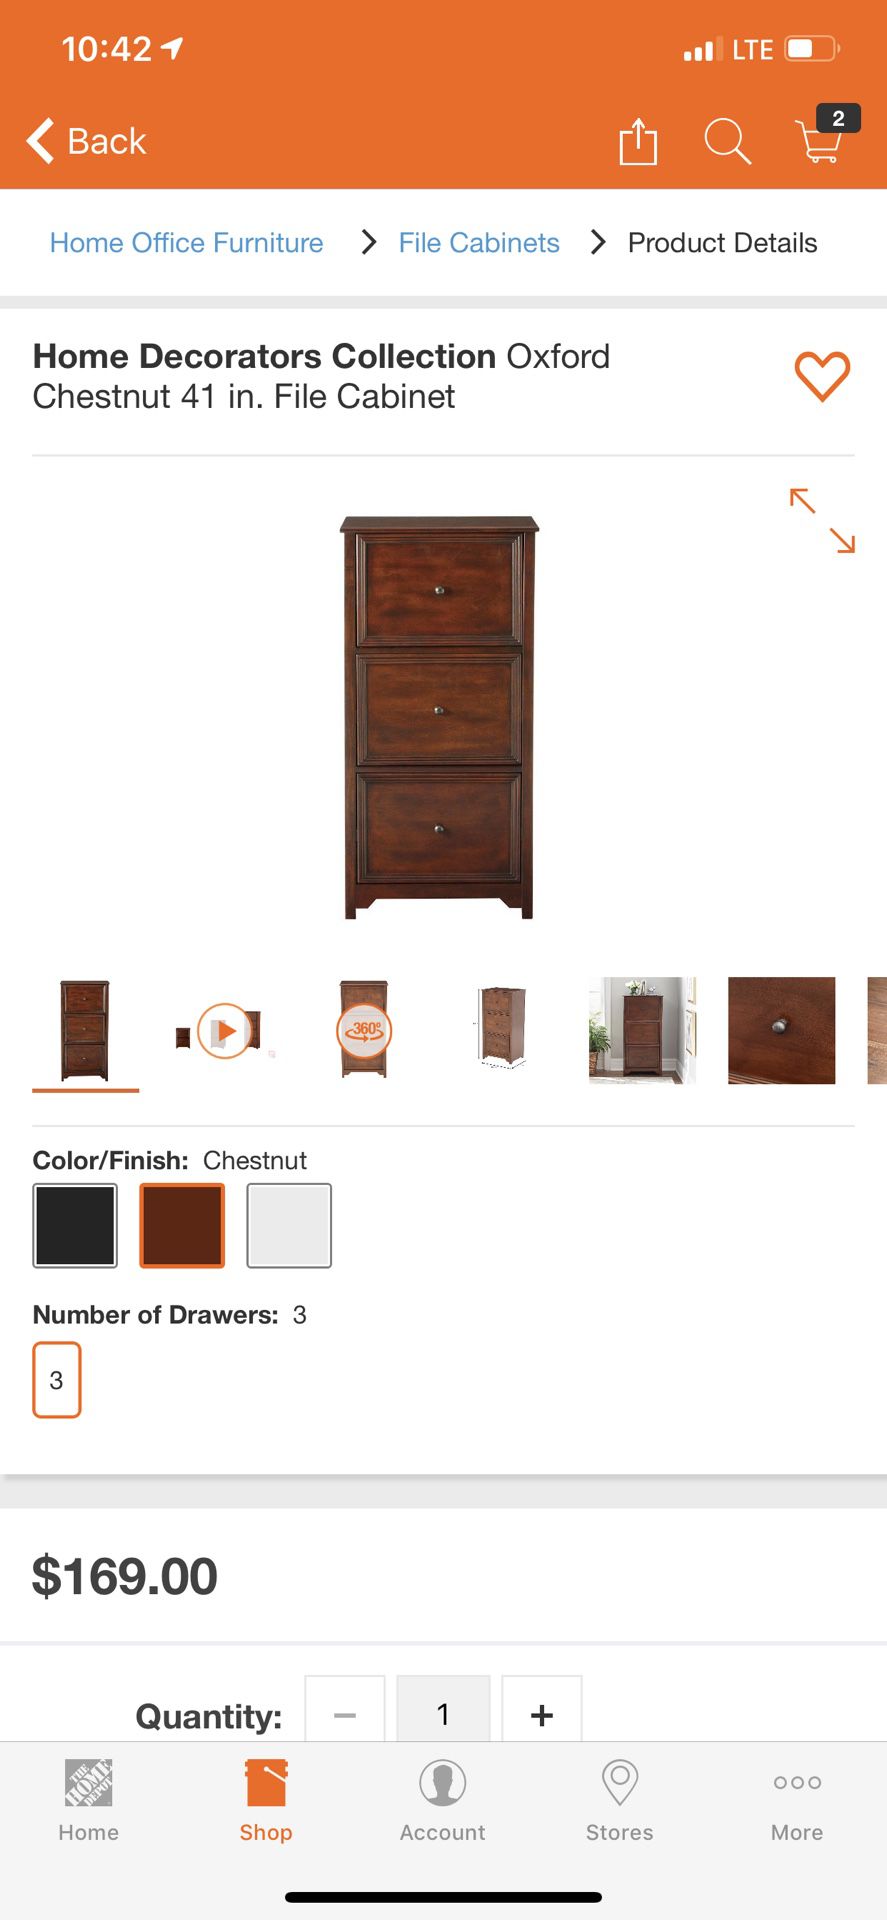 Home Decorators Collection Oxford Chestnut 41 in. File Cabinet